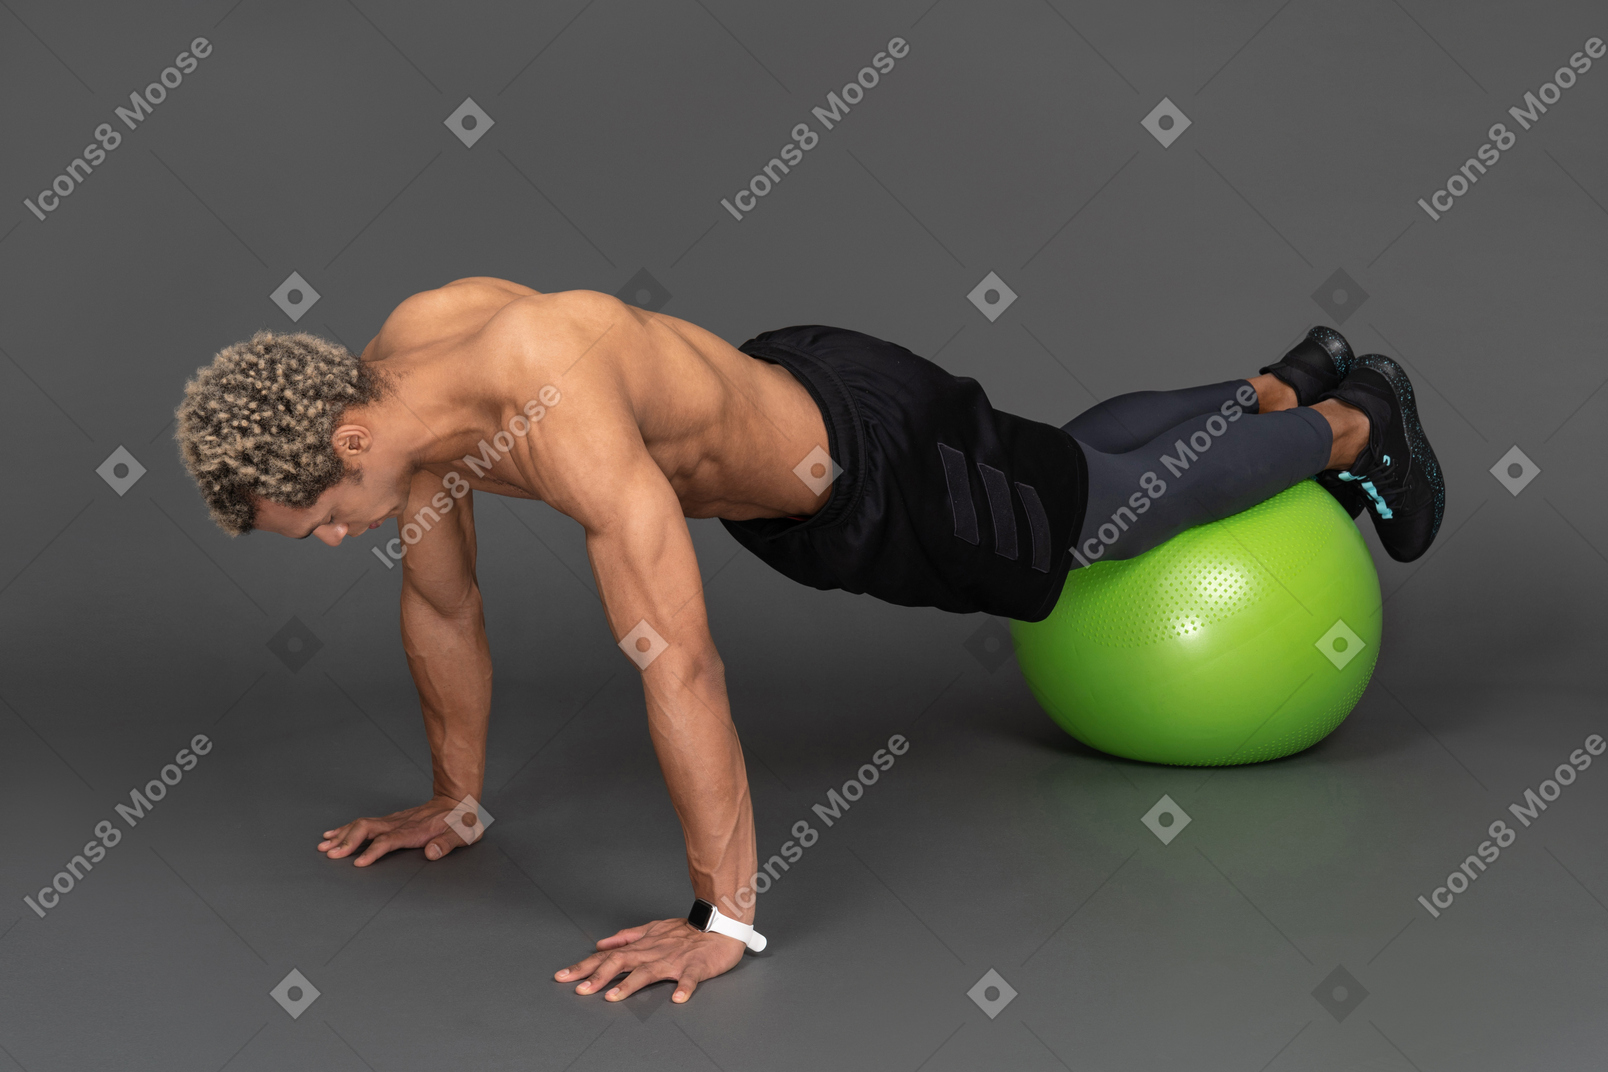 Three-quarter view of a shirtless afro man making push-ups on a gym ball